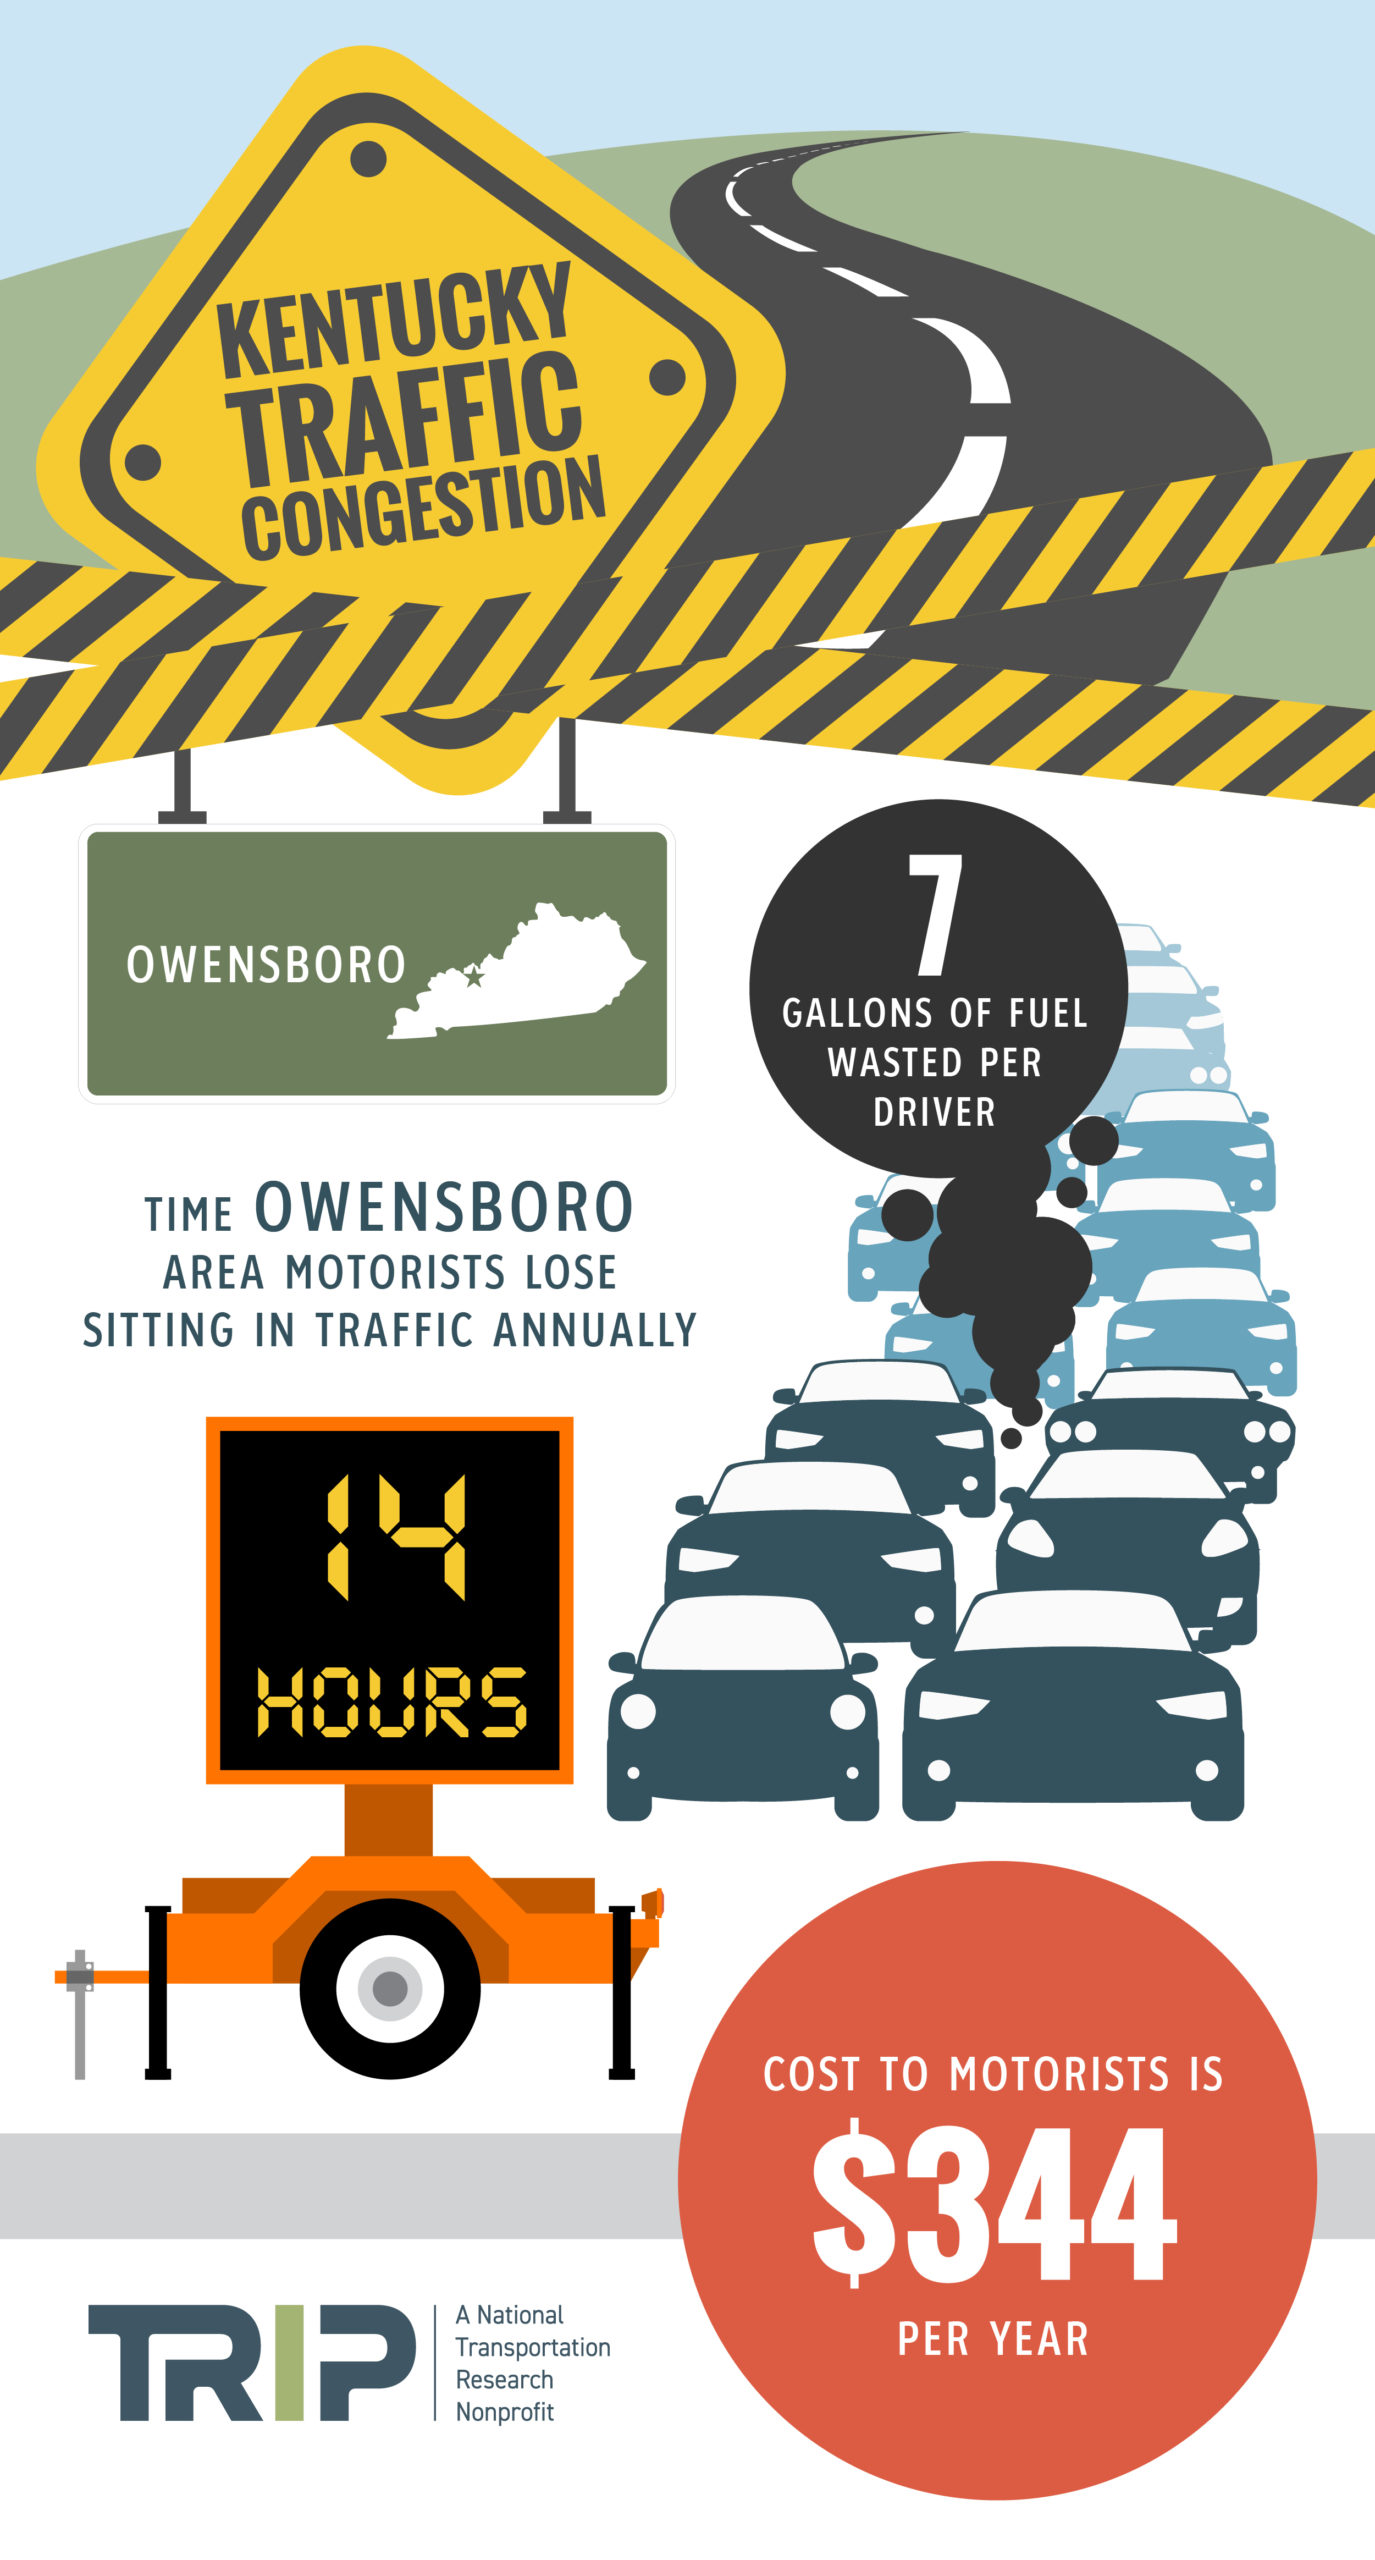 Owensboro Traffic Congestion Infographic – February 2022